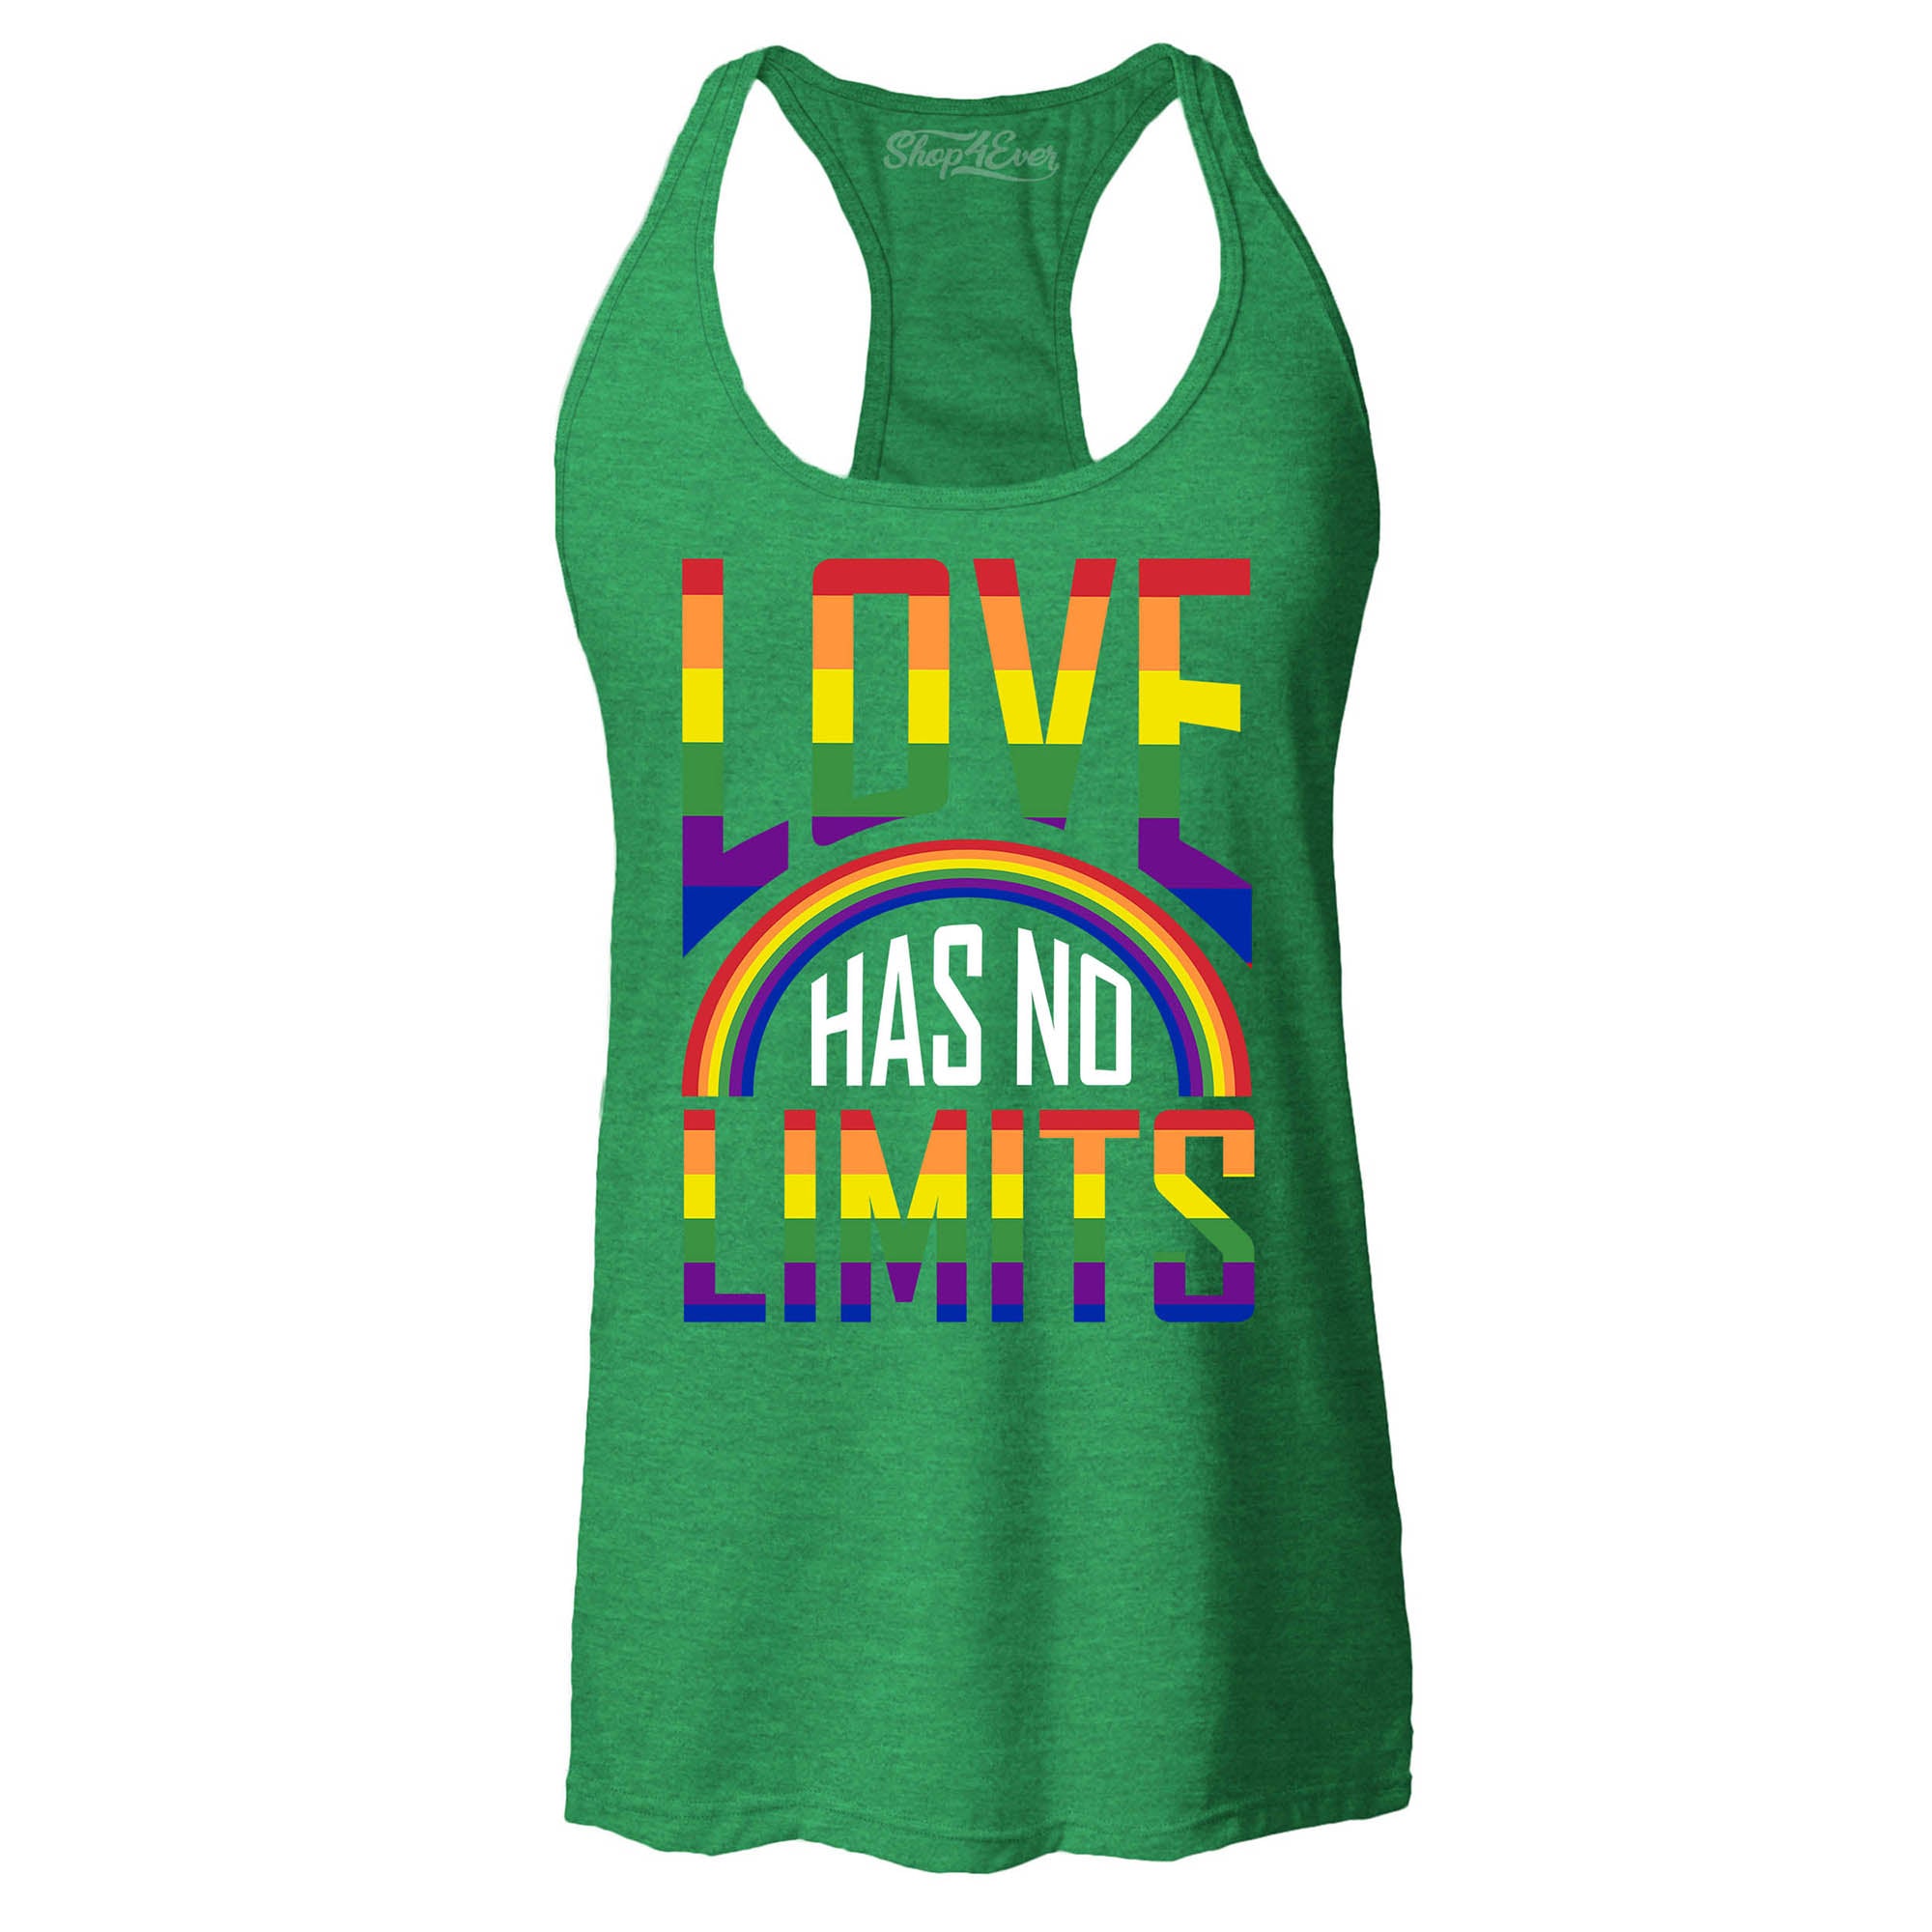 Love Has No Limits ~ Gay Pride Women's Racerback Tank Top Slim Fit